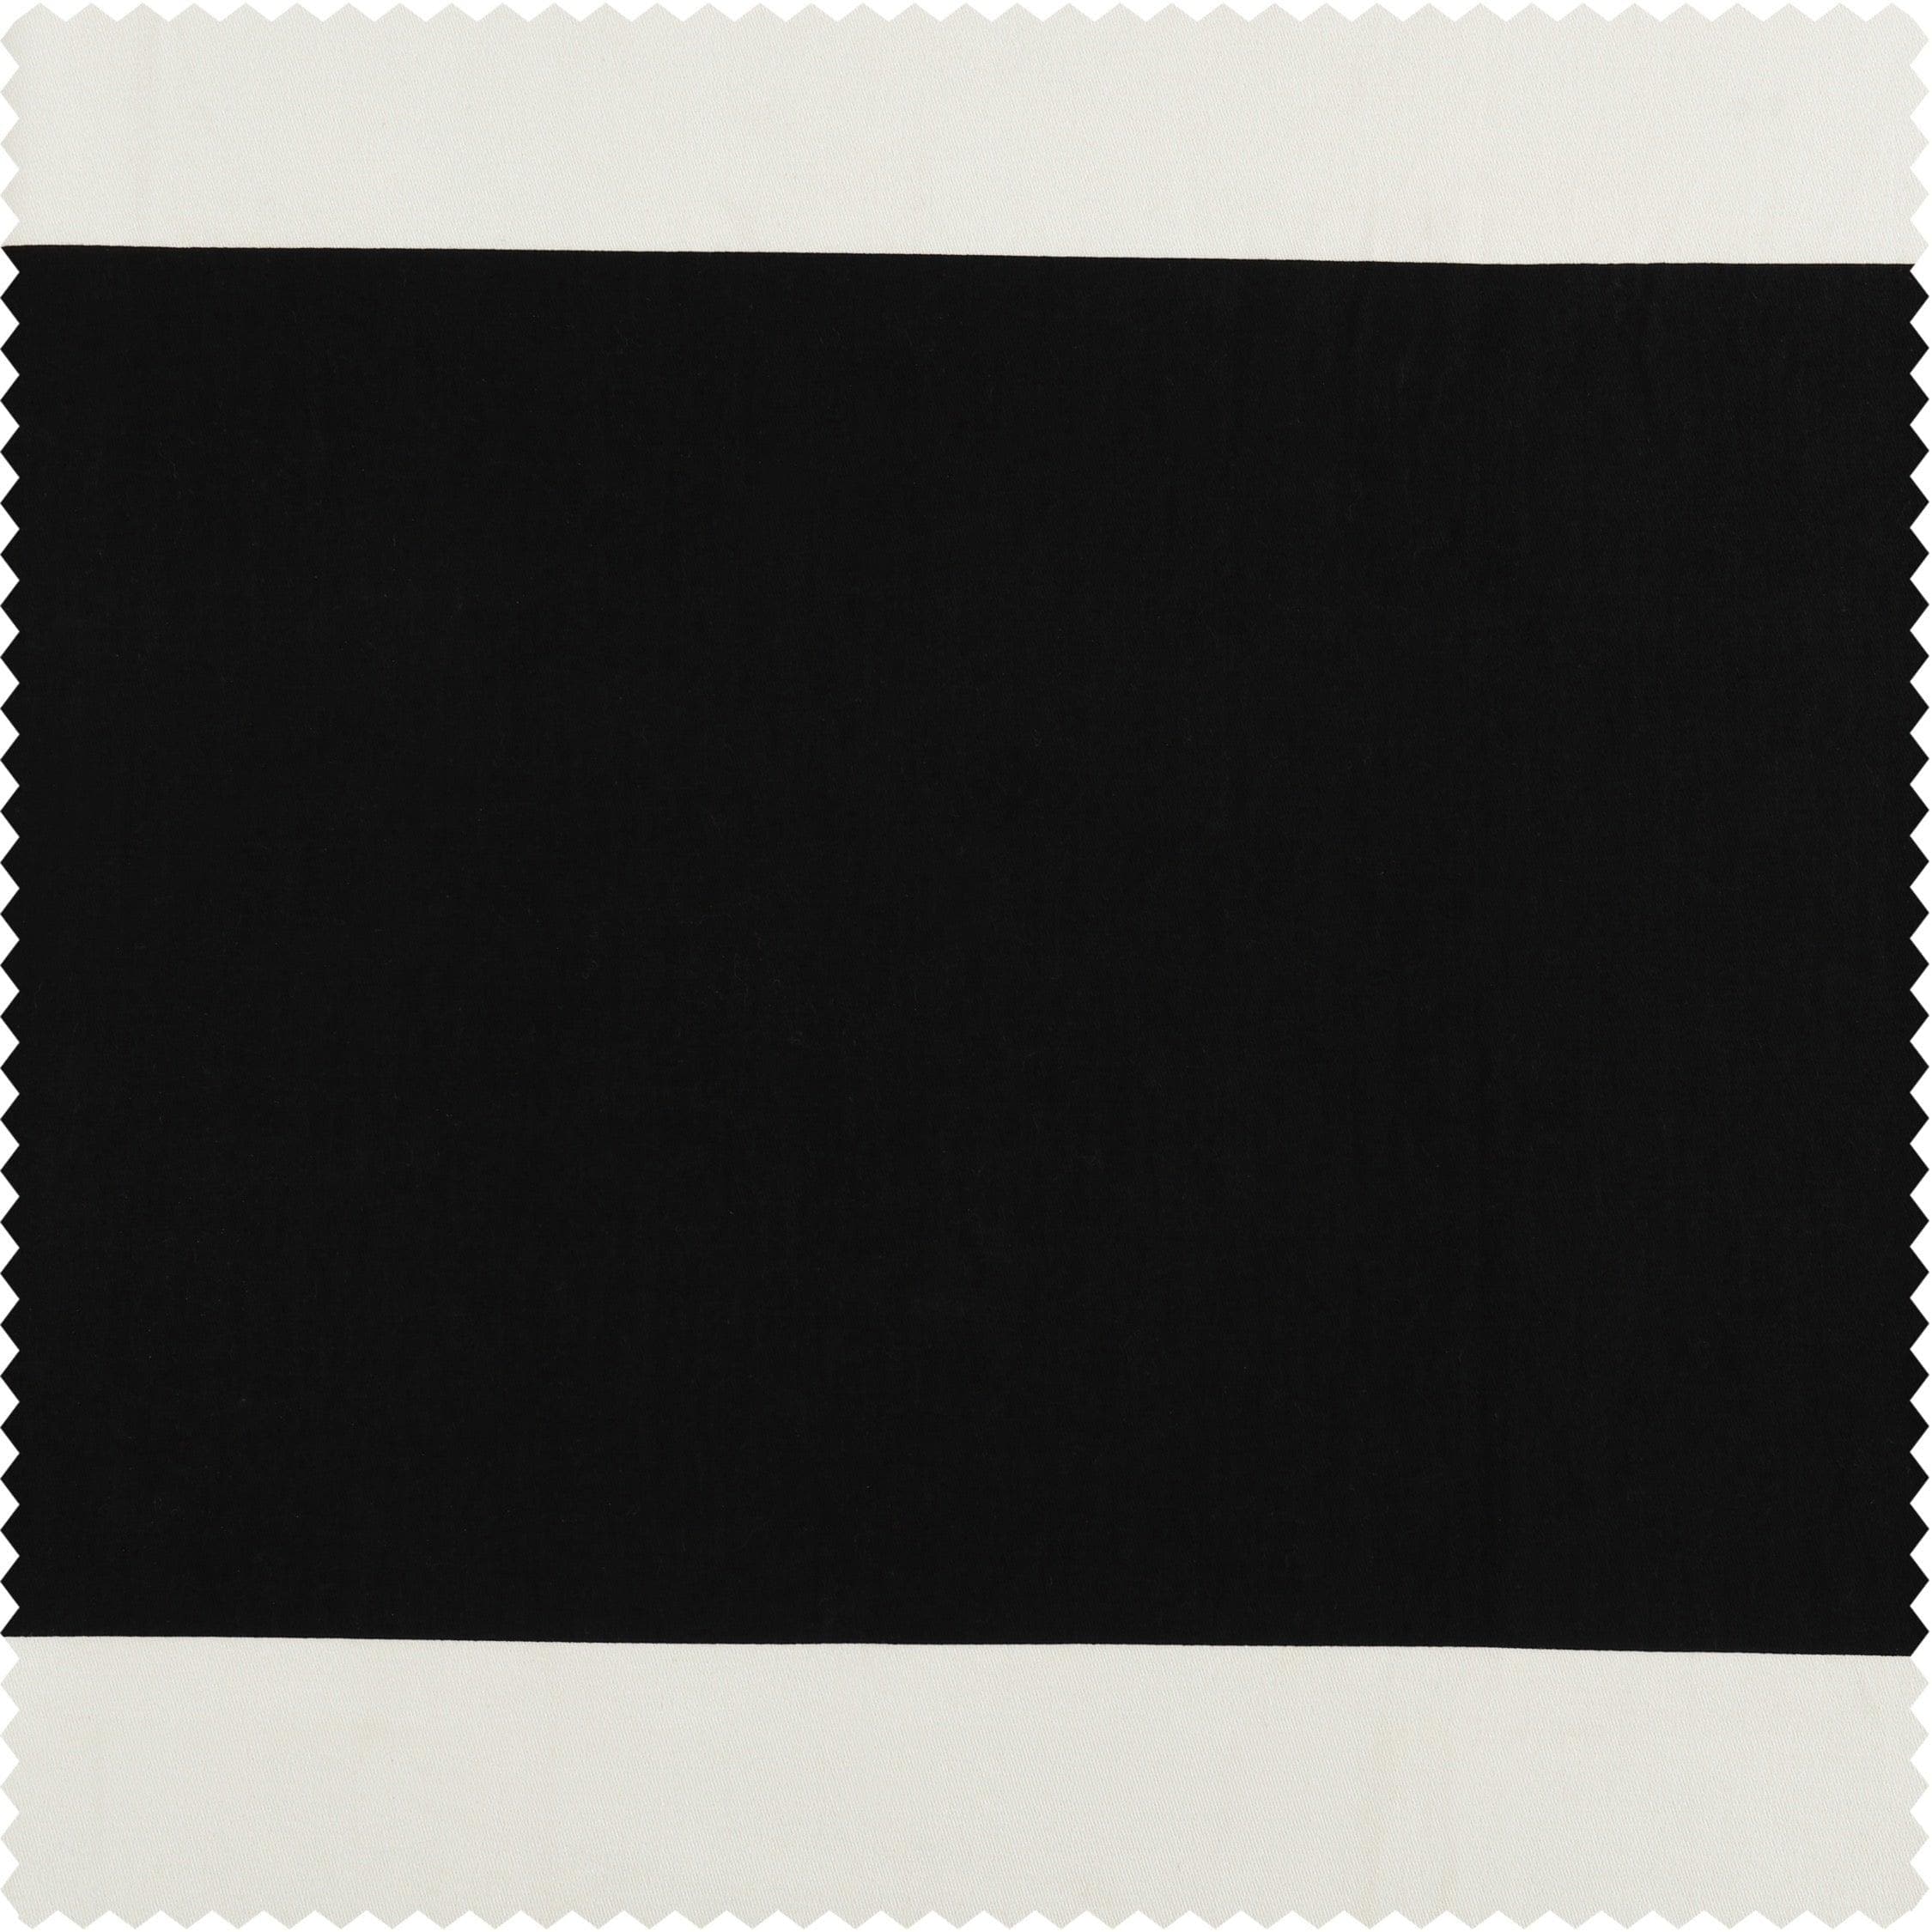 Onyx Black & Off White Horizontal Striped French Pleat Printed Cotton Room Darkening Curtain